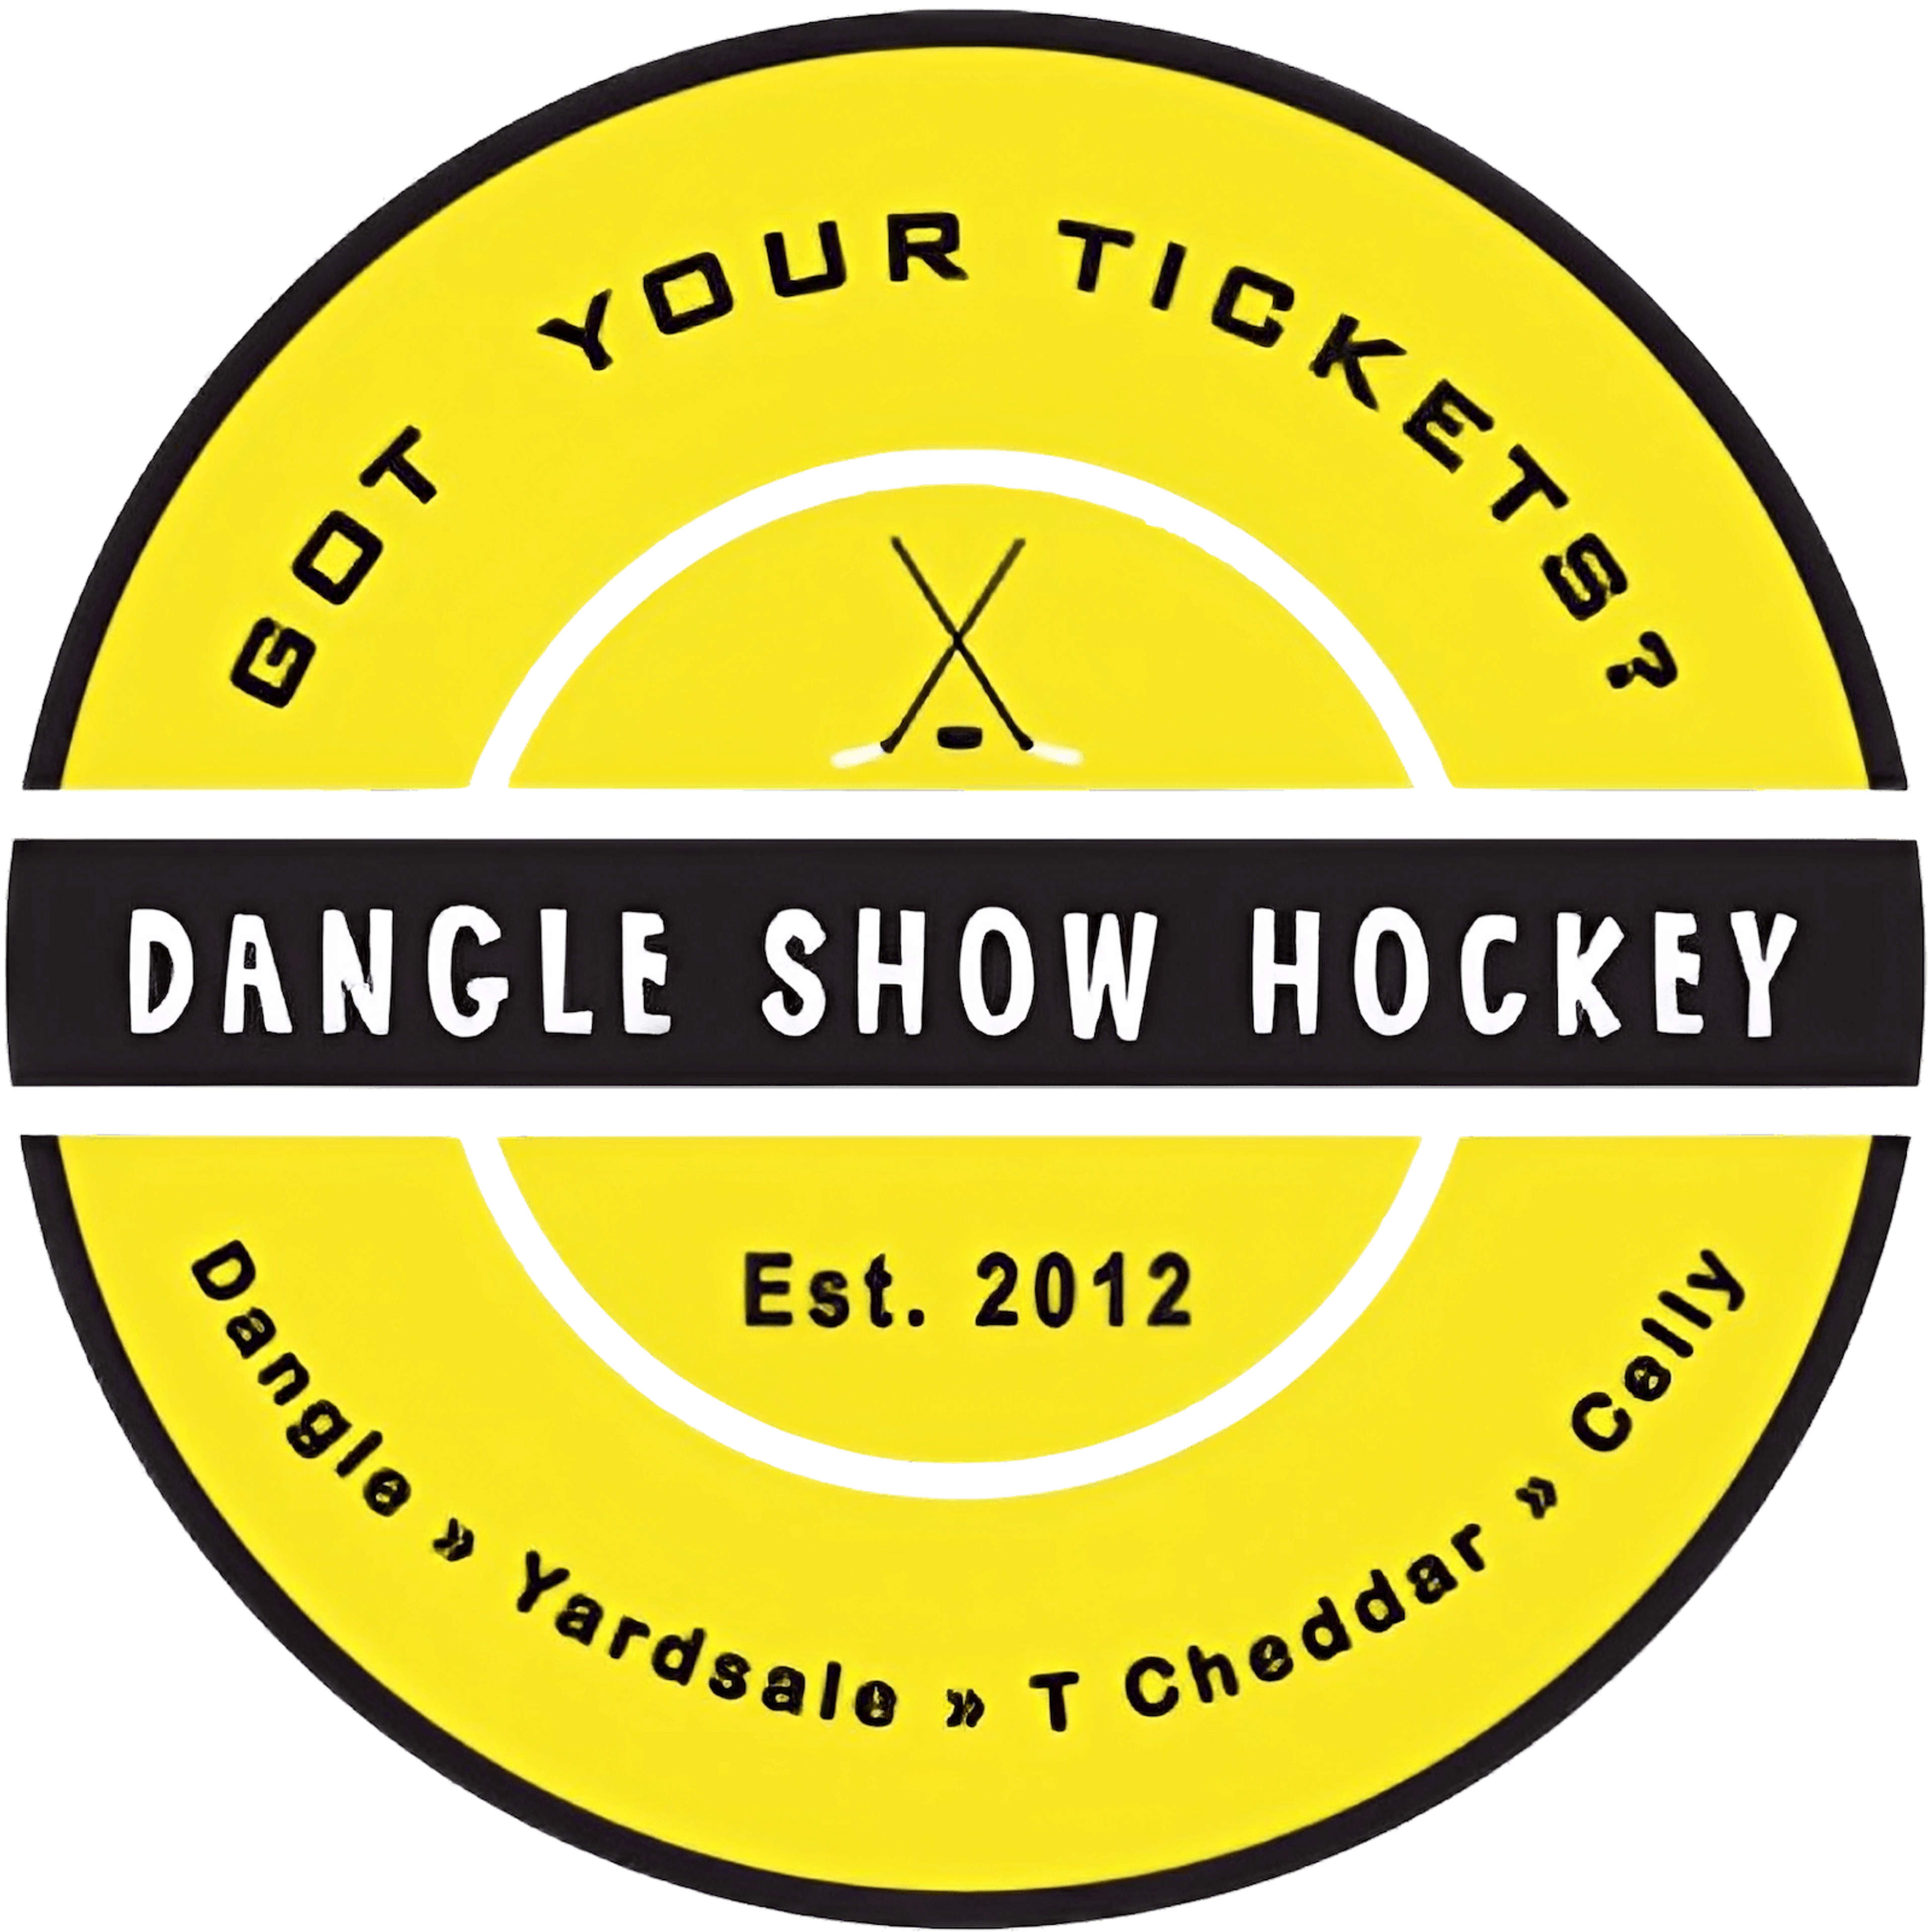 Dangle Show Hockey logo on a transparent background